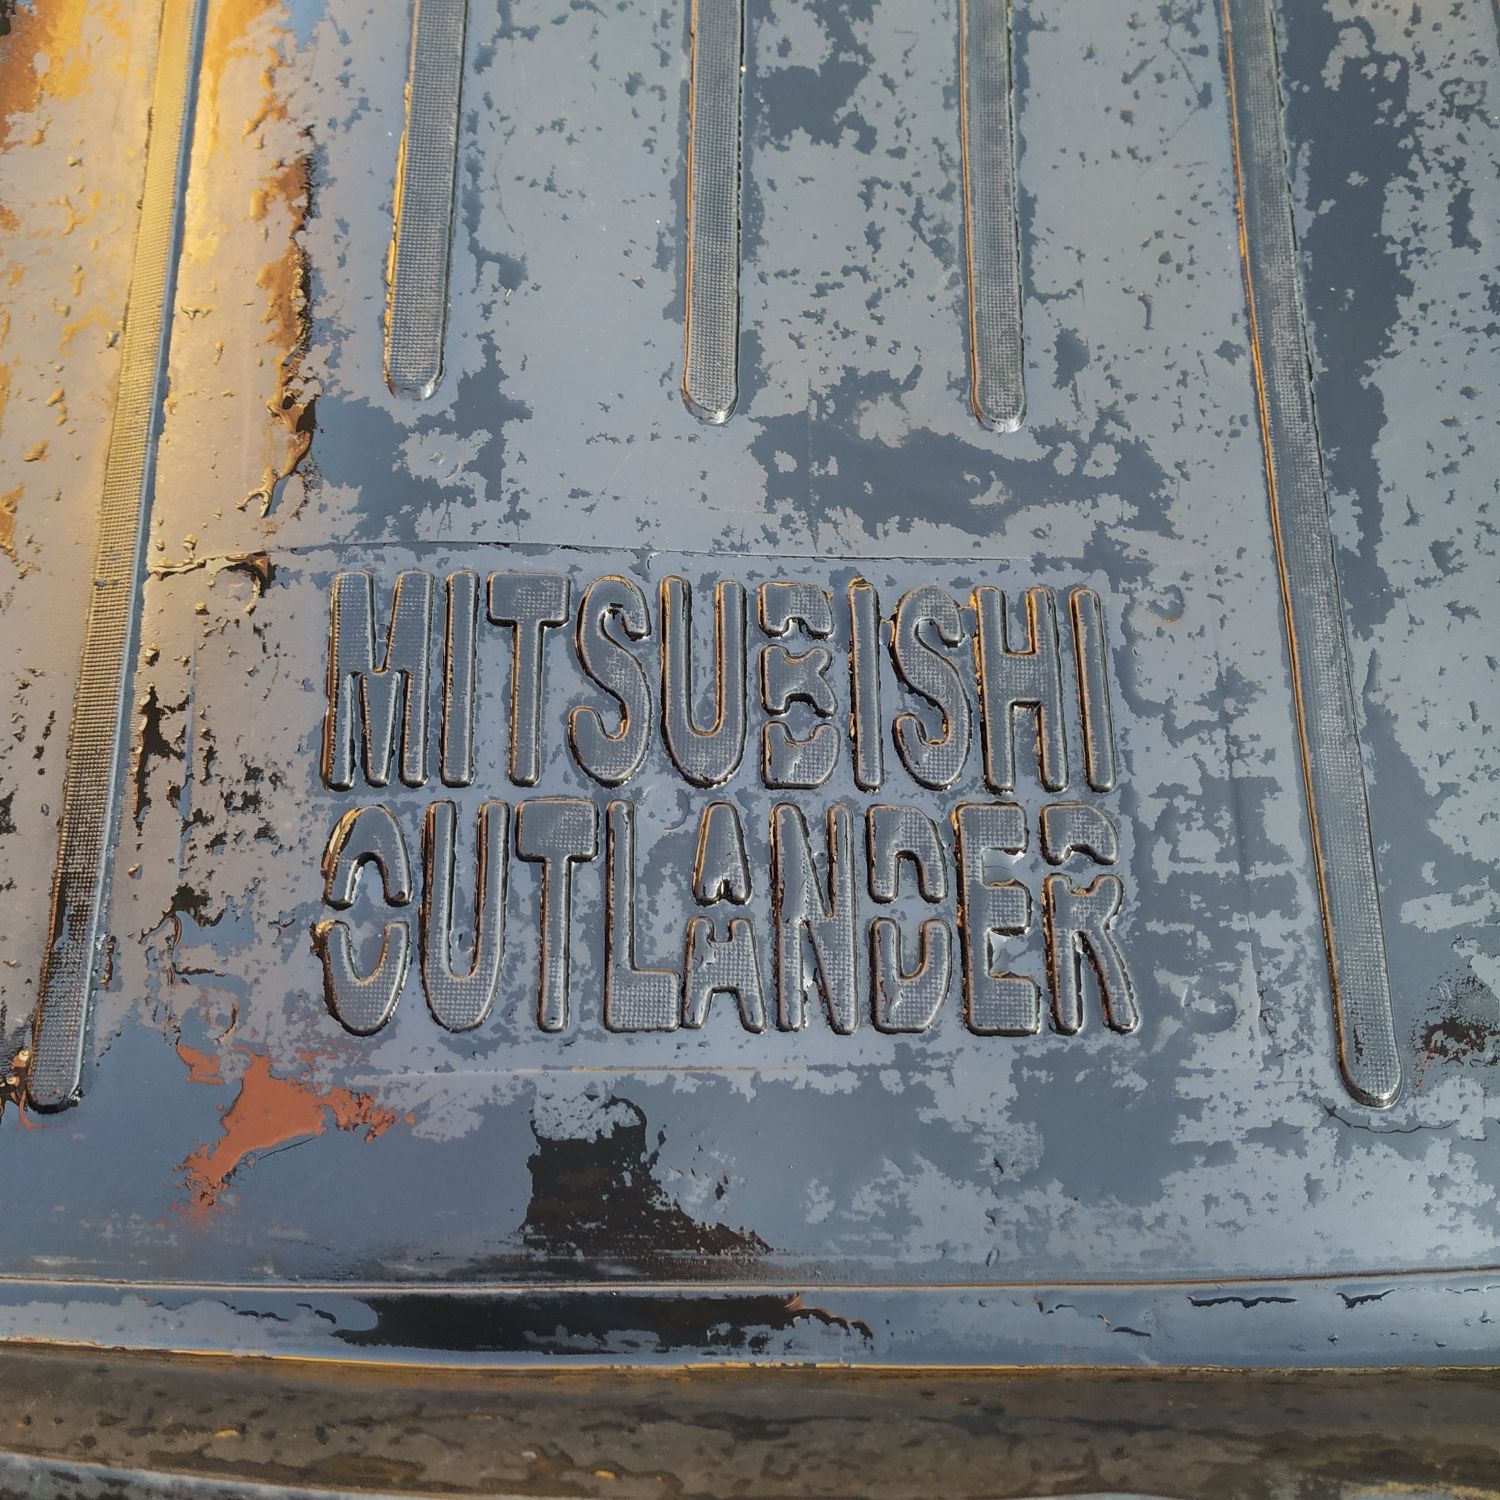 Коврик в багажник Оутлендер Outlender06-08г, Ford Мондео08-12г.Kia cer